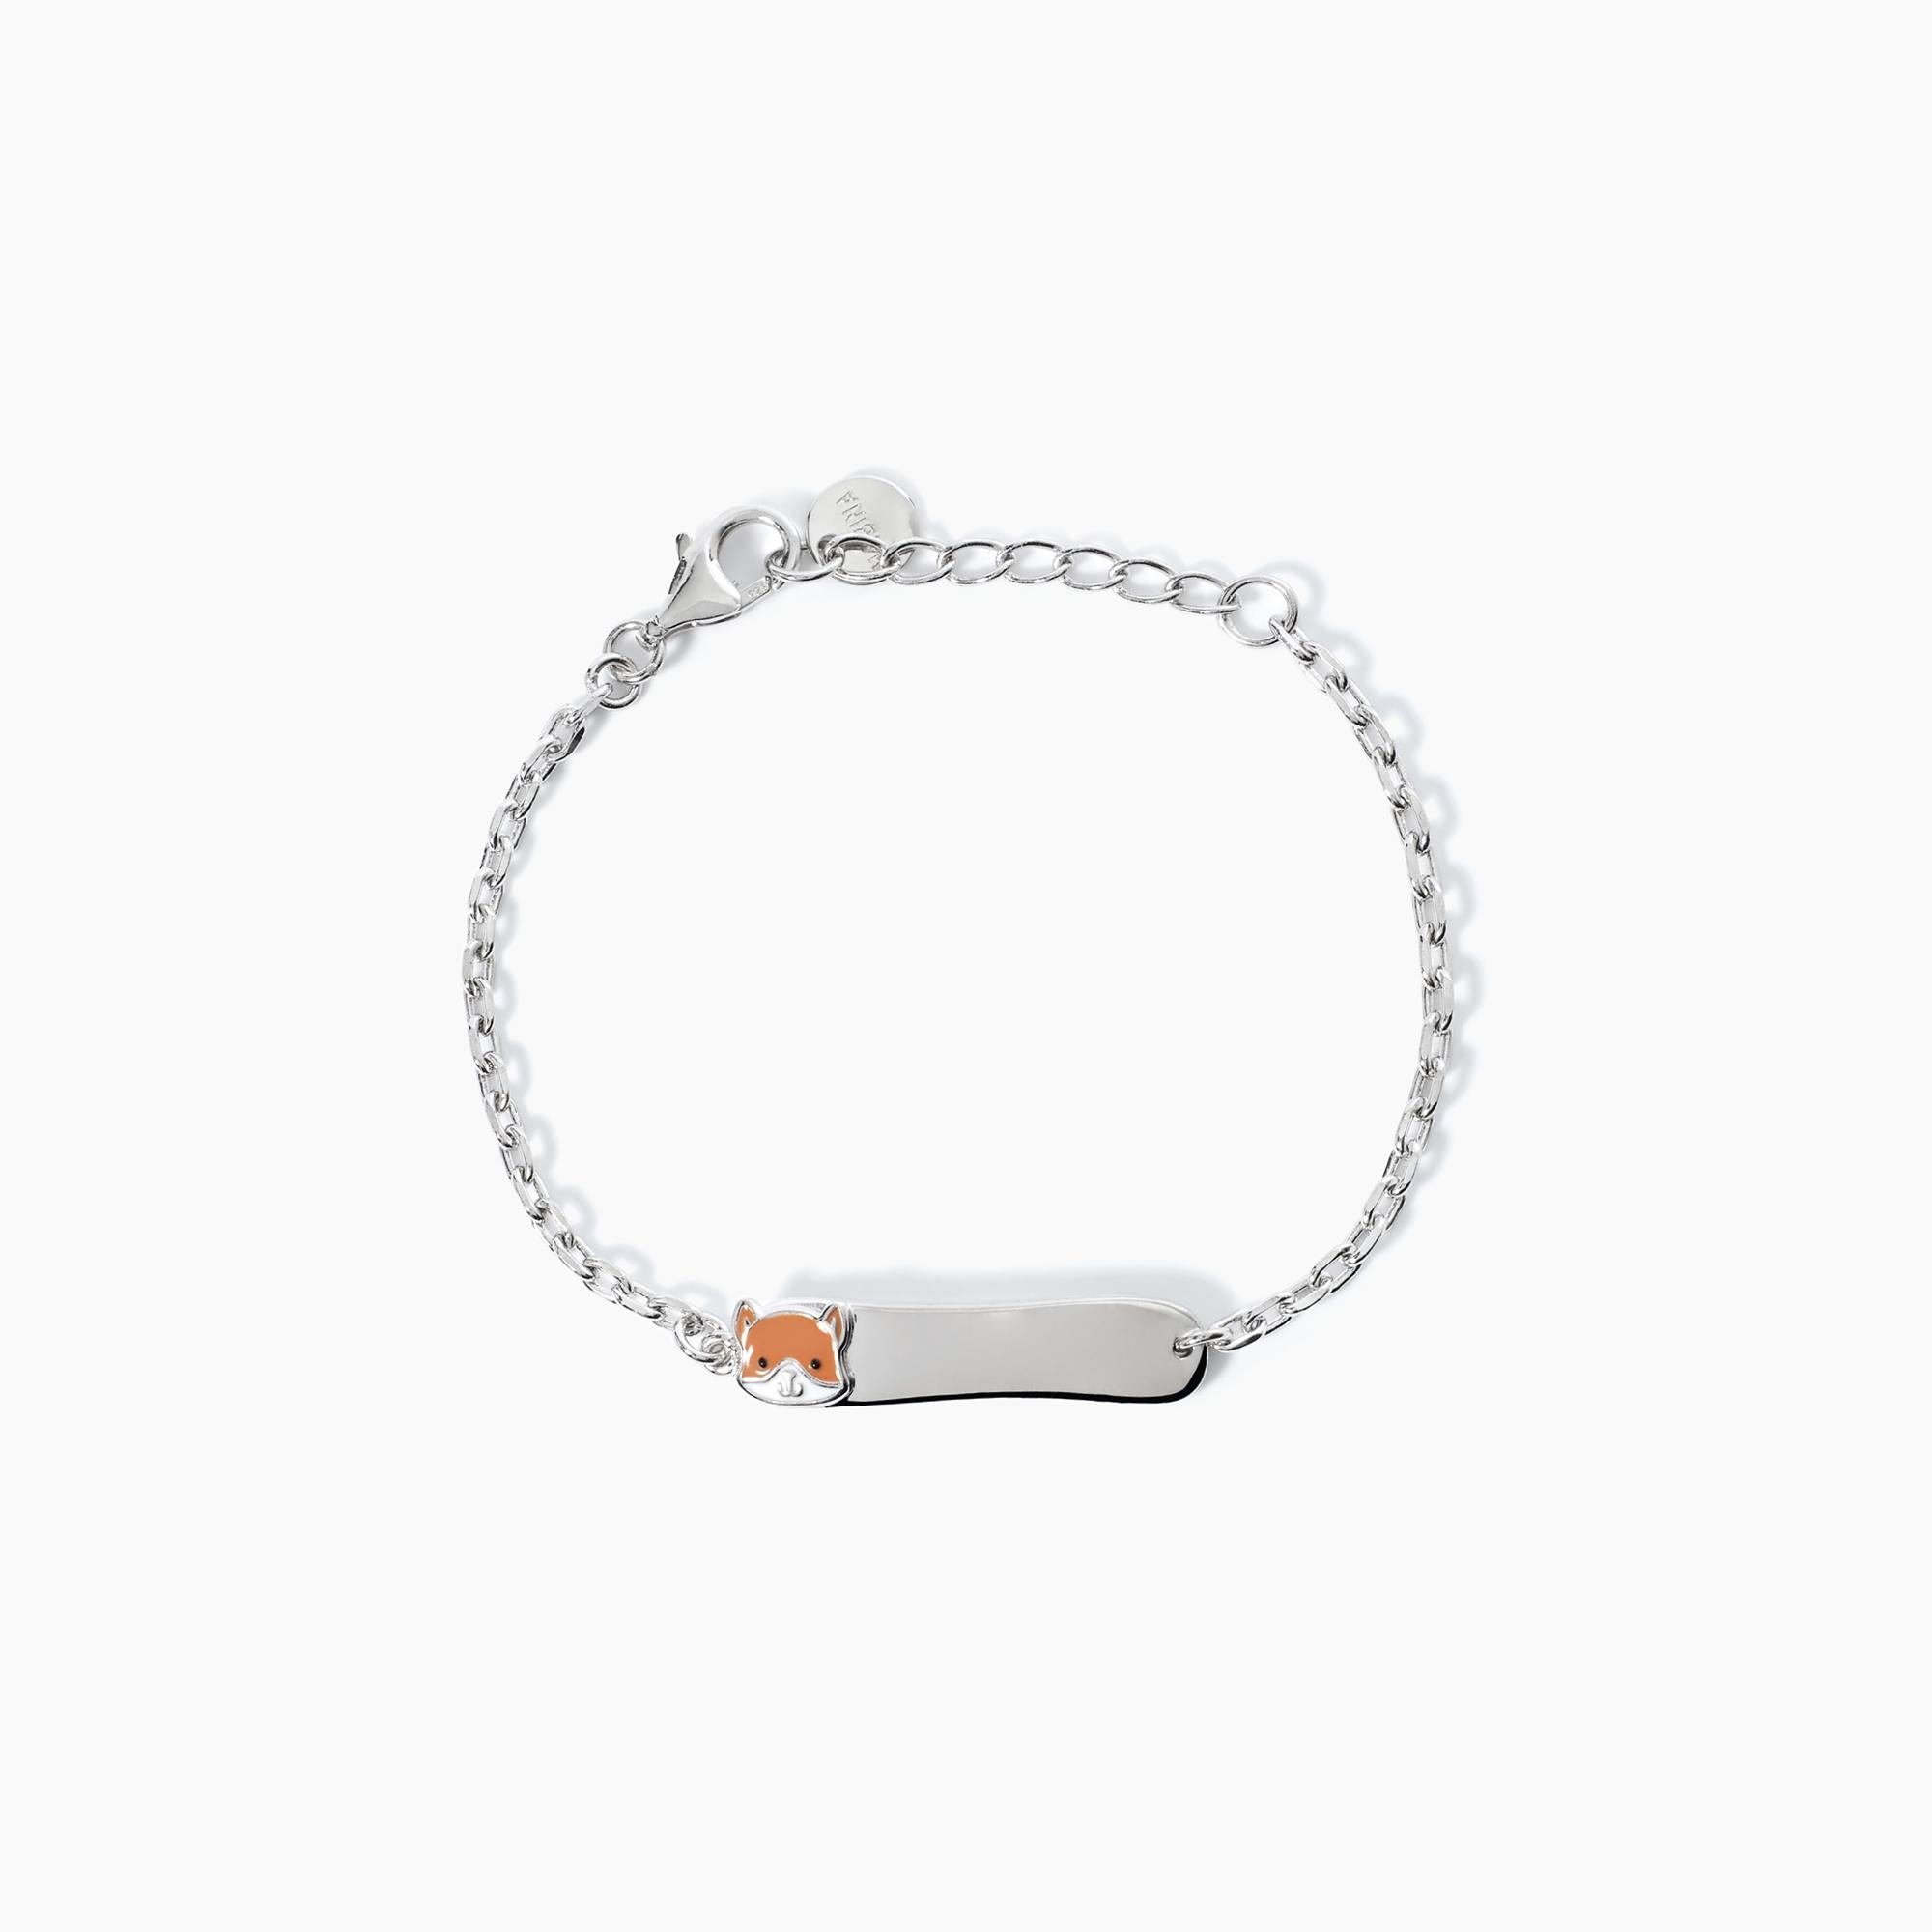 Mabina Junior - Bracelet renard personnalisable FOX-TAG - 533597